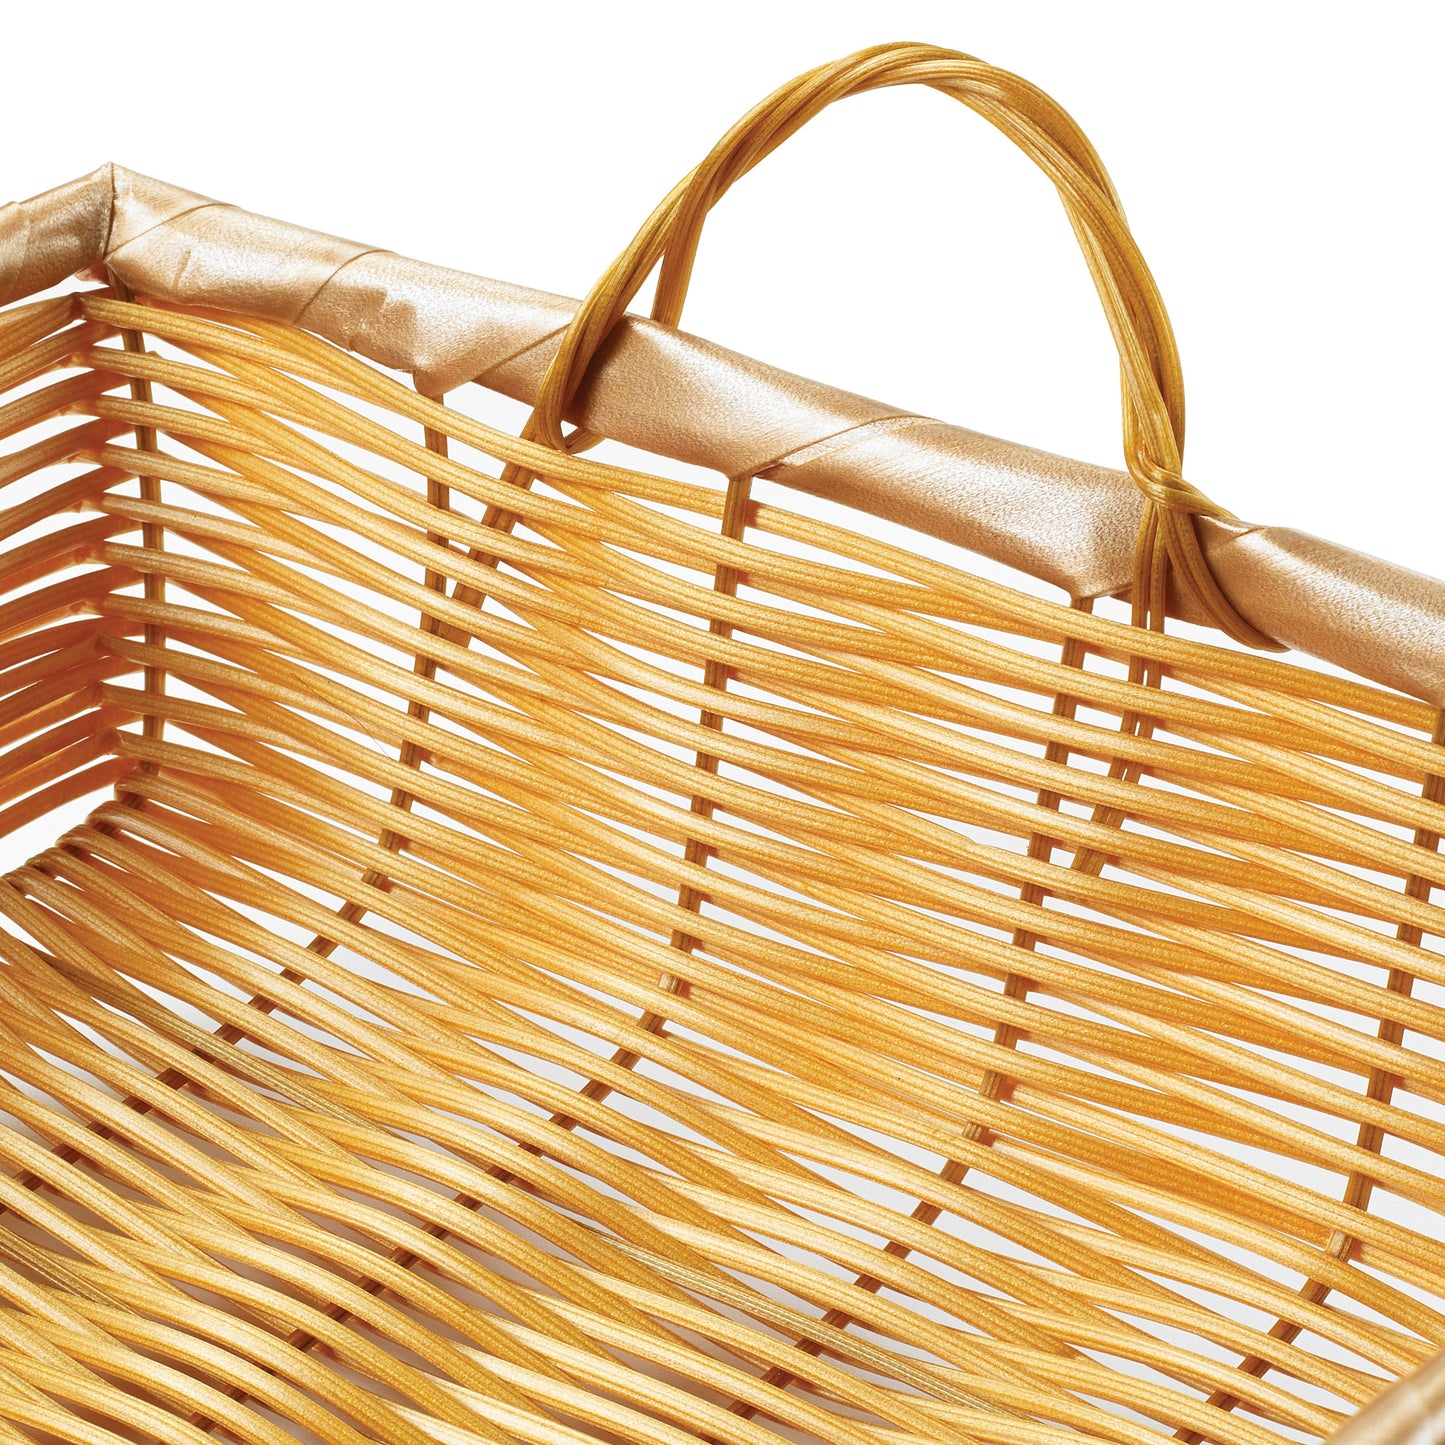 Natural Woven Basket, Rectangular with Handles - 16" x 11" x 3"